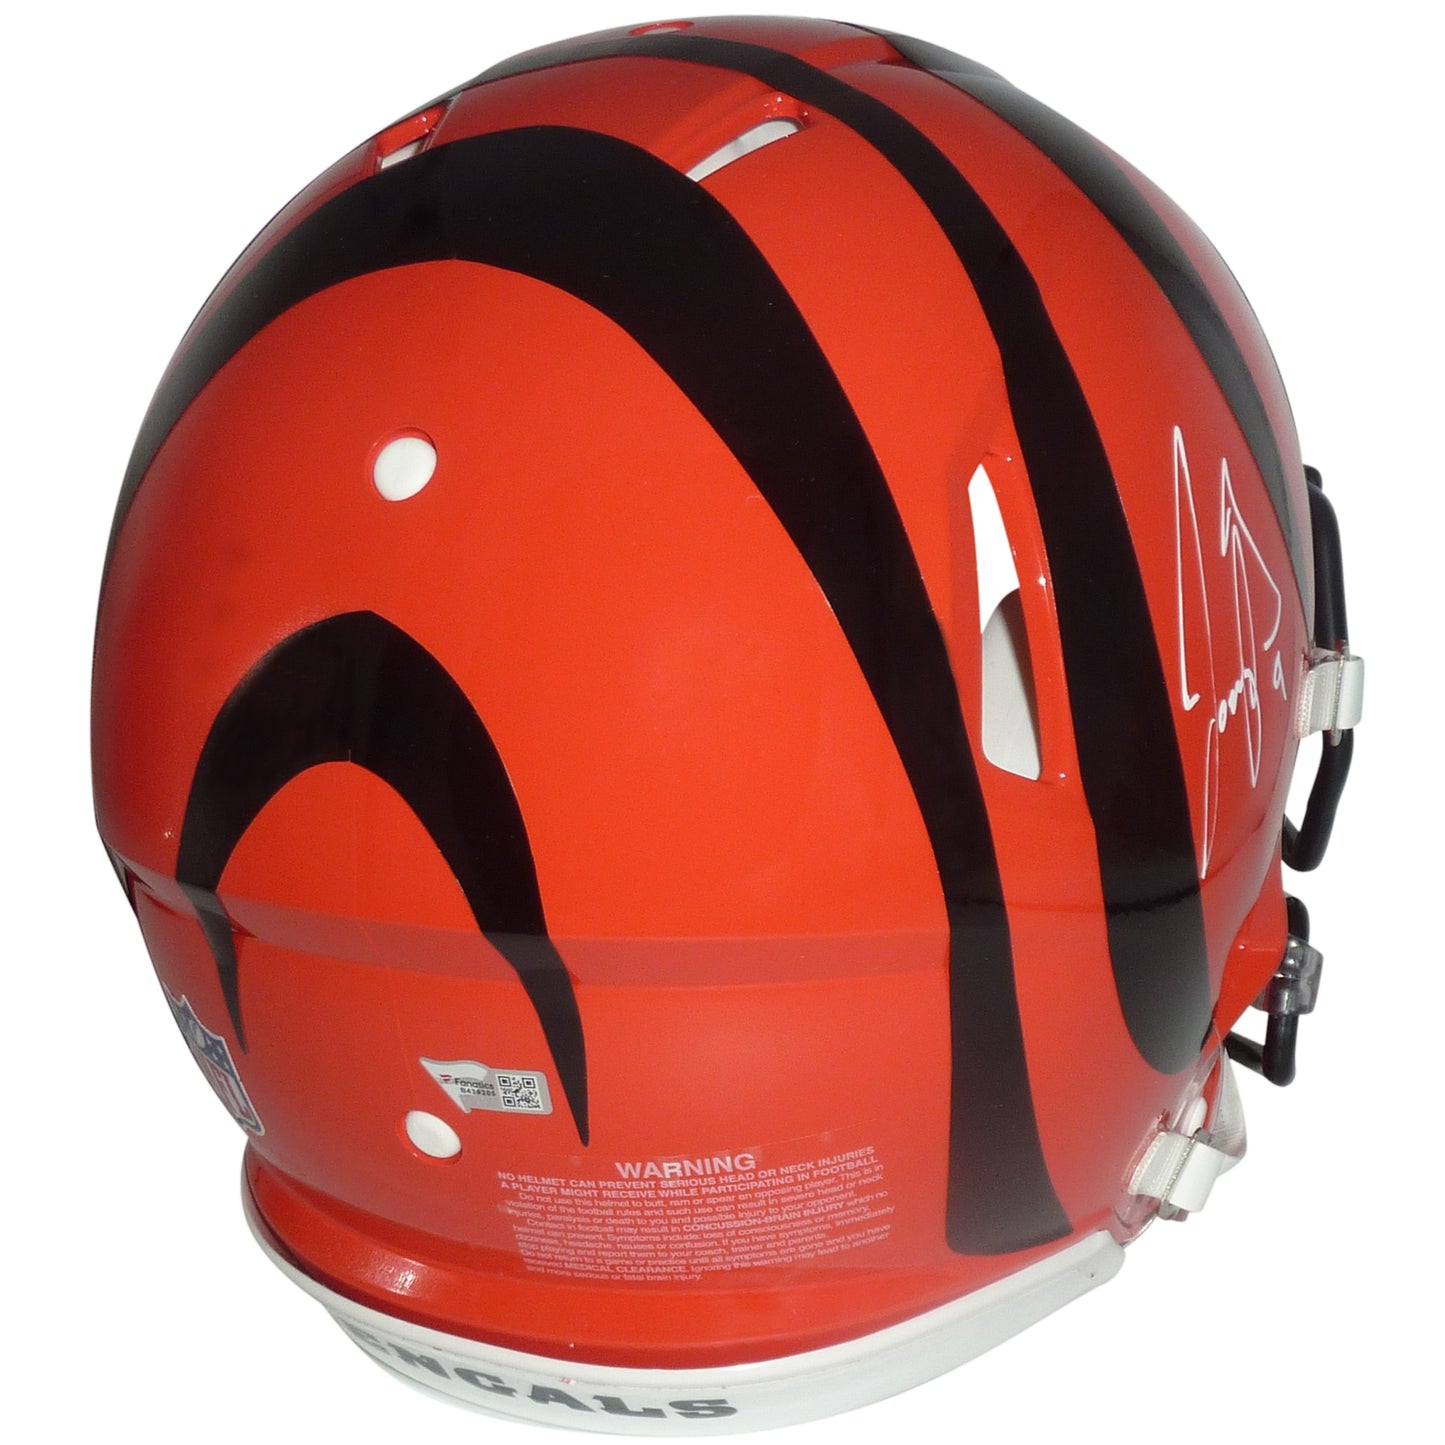 Joe Burrow Autographed Cincinnati Bengals (Speed) Authentic Proline Helmet - Fanatics Authentic